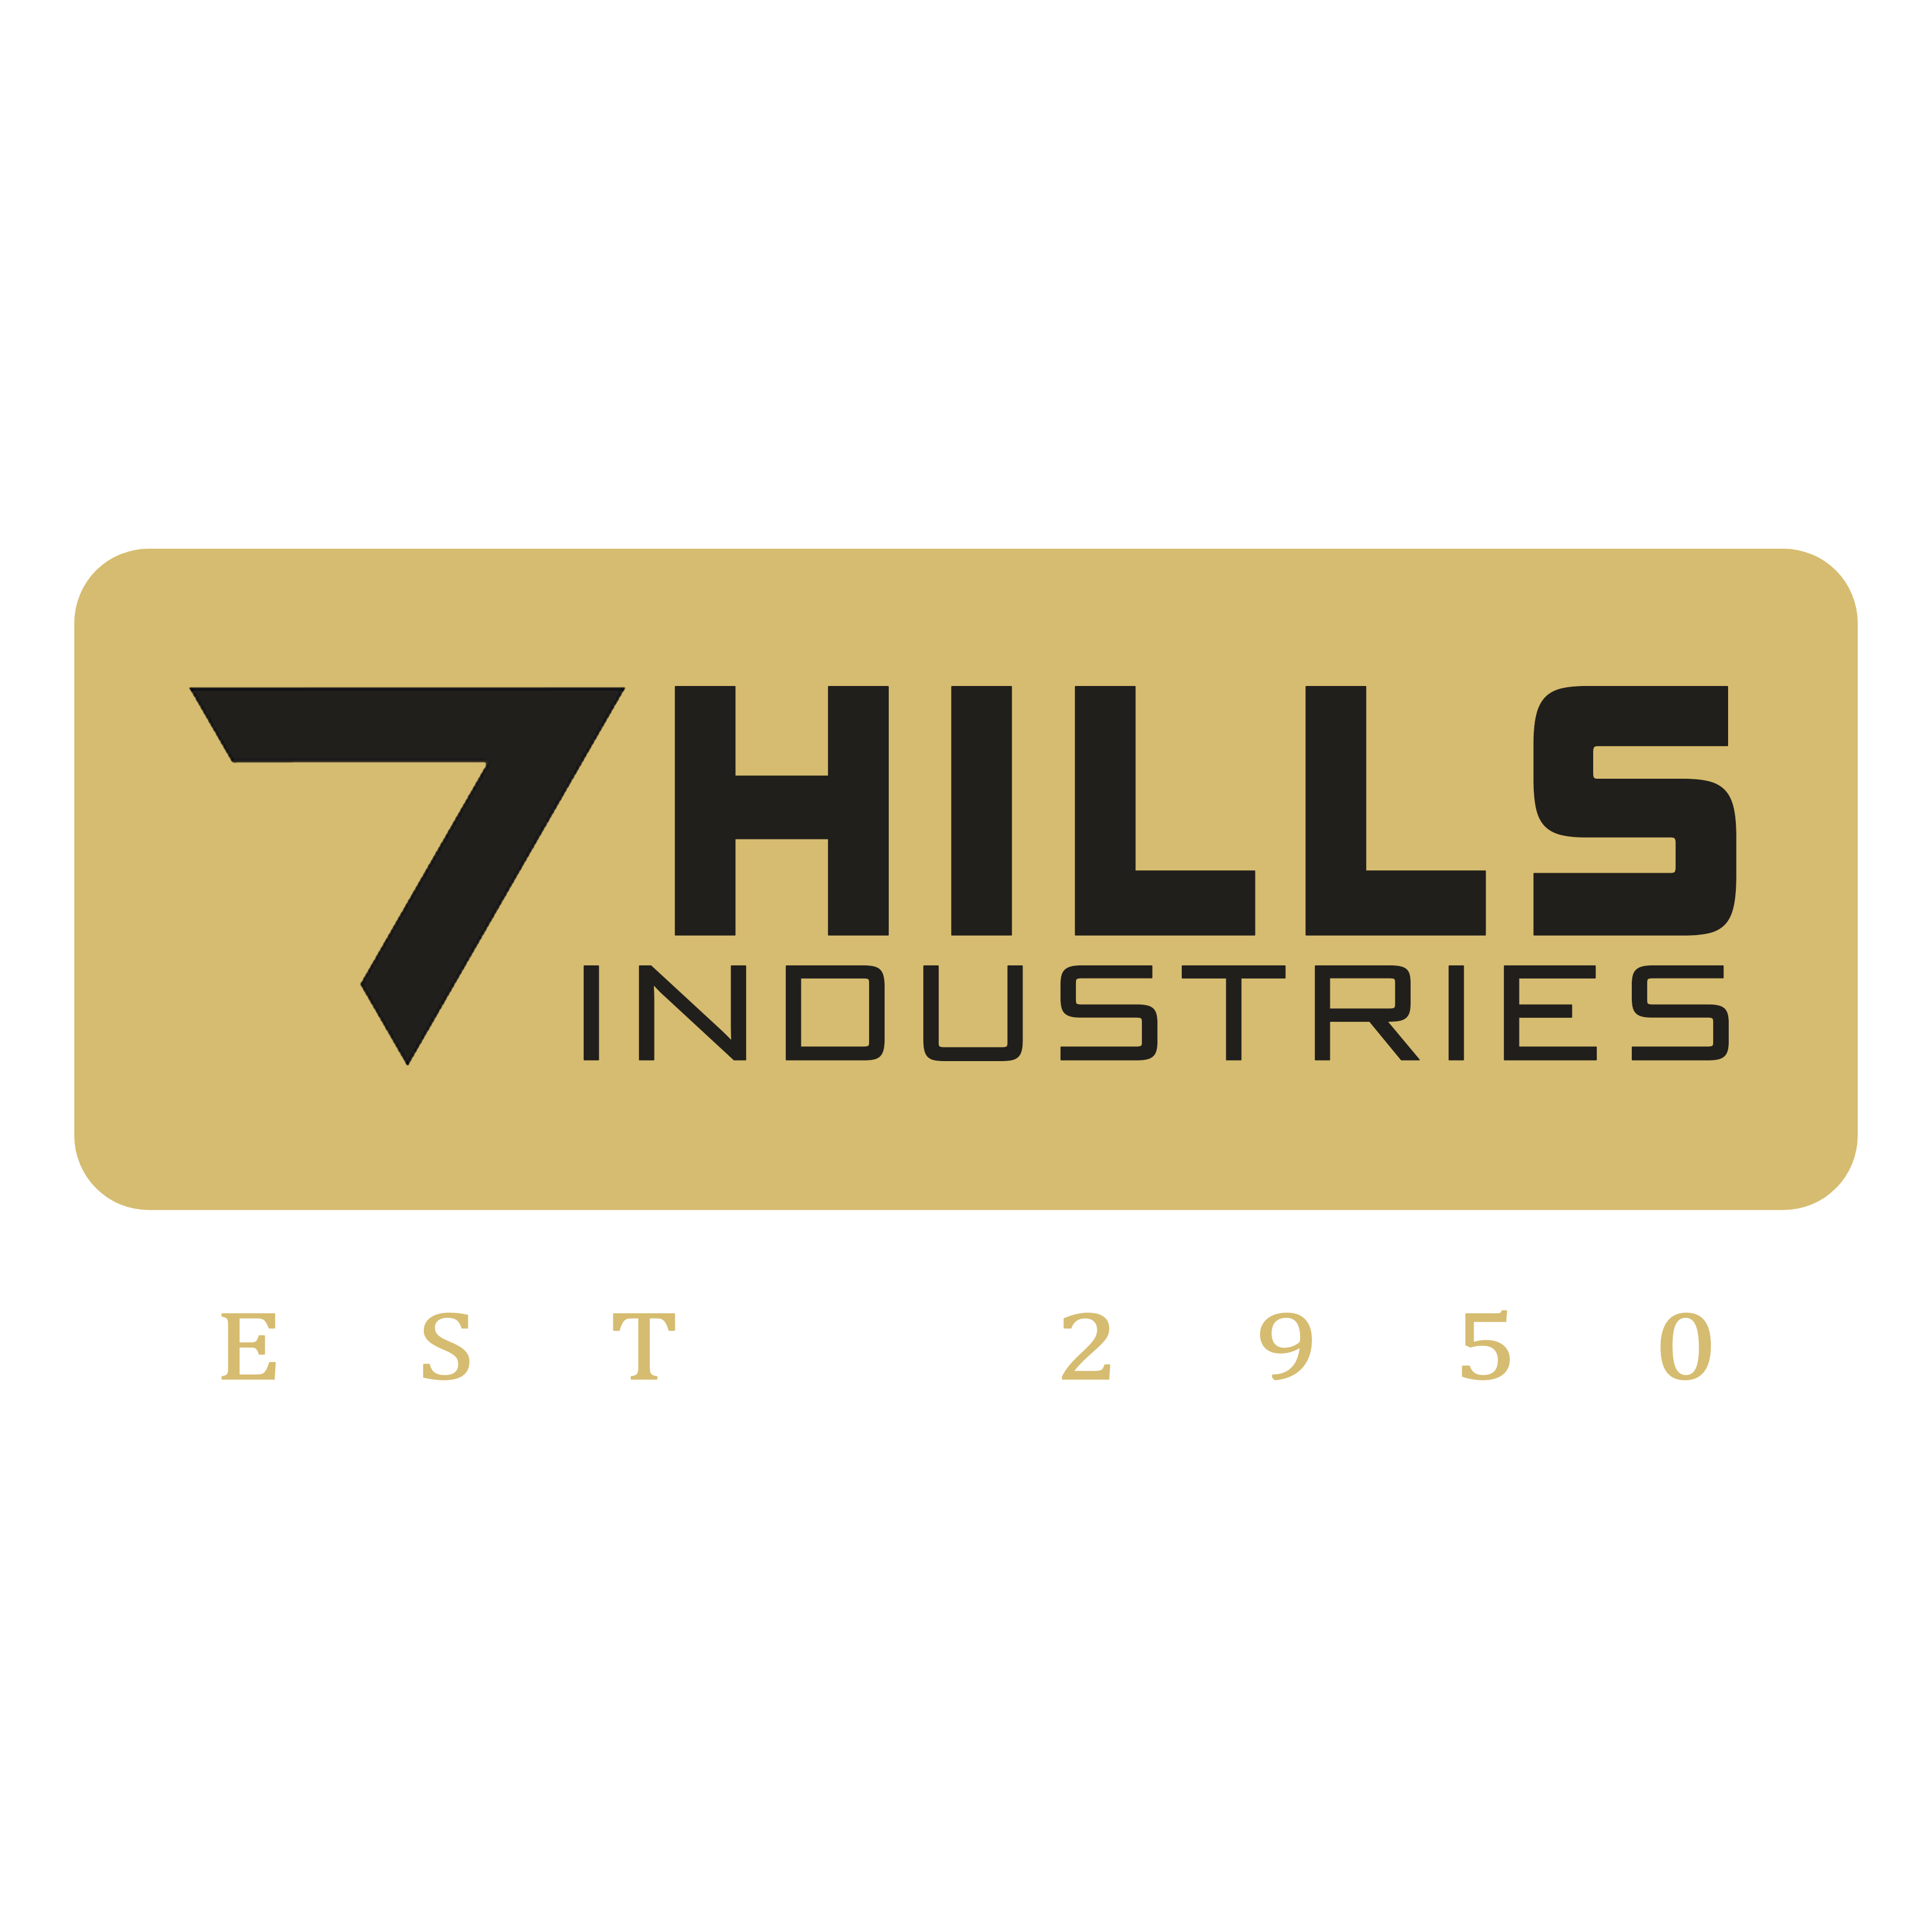 7Hills Industries